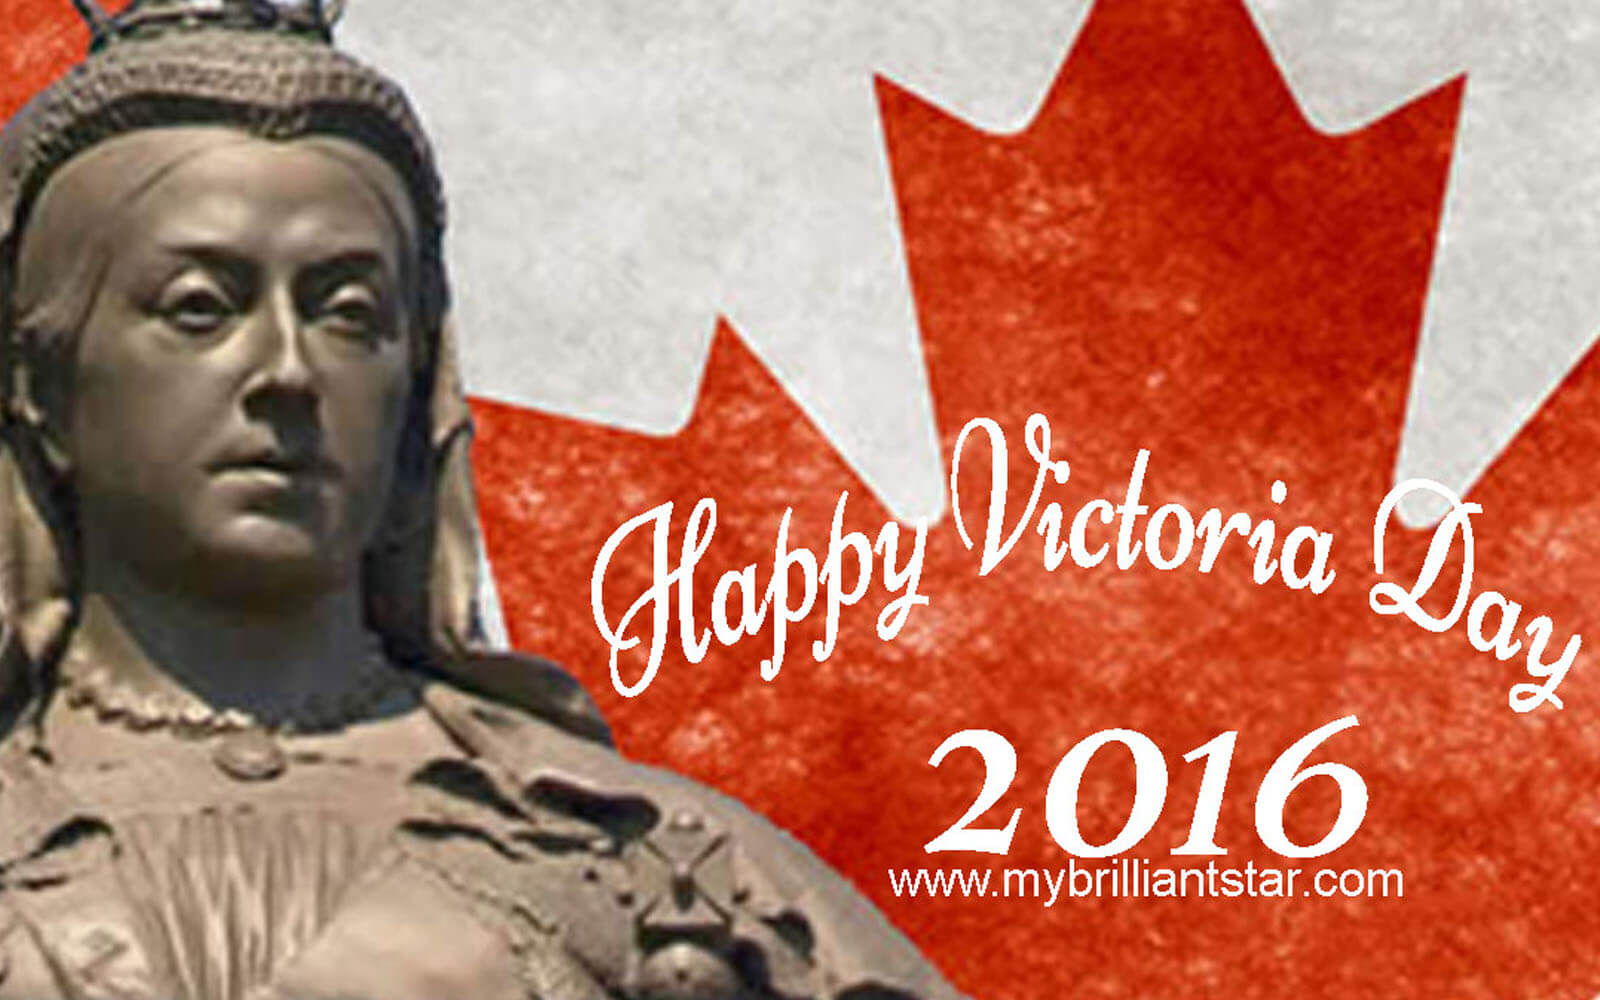 Happy Victoria Day 2016